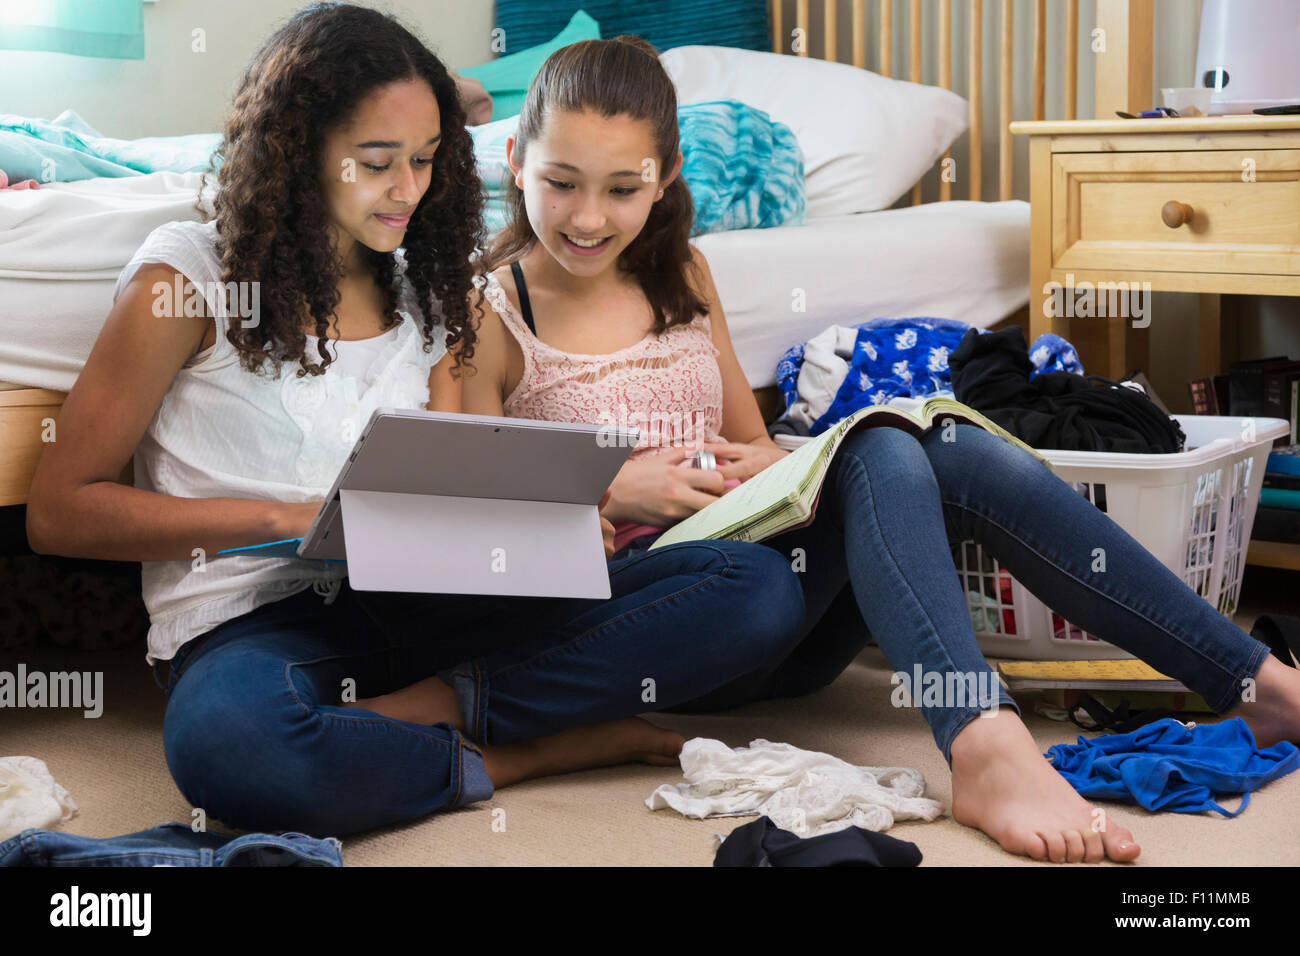 Teenage Girls using digital tablet in bedroom Banque D'Images